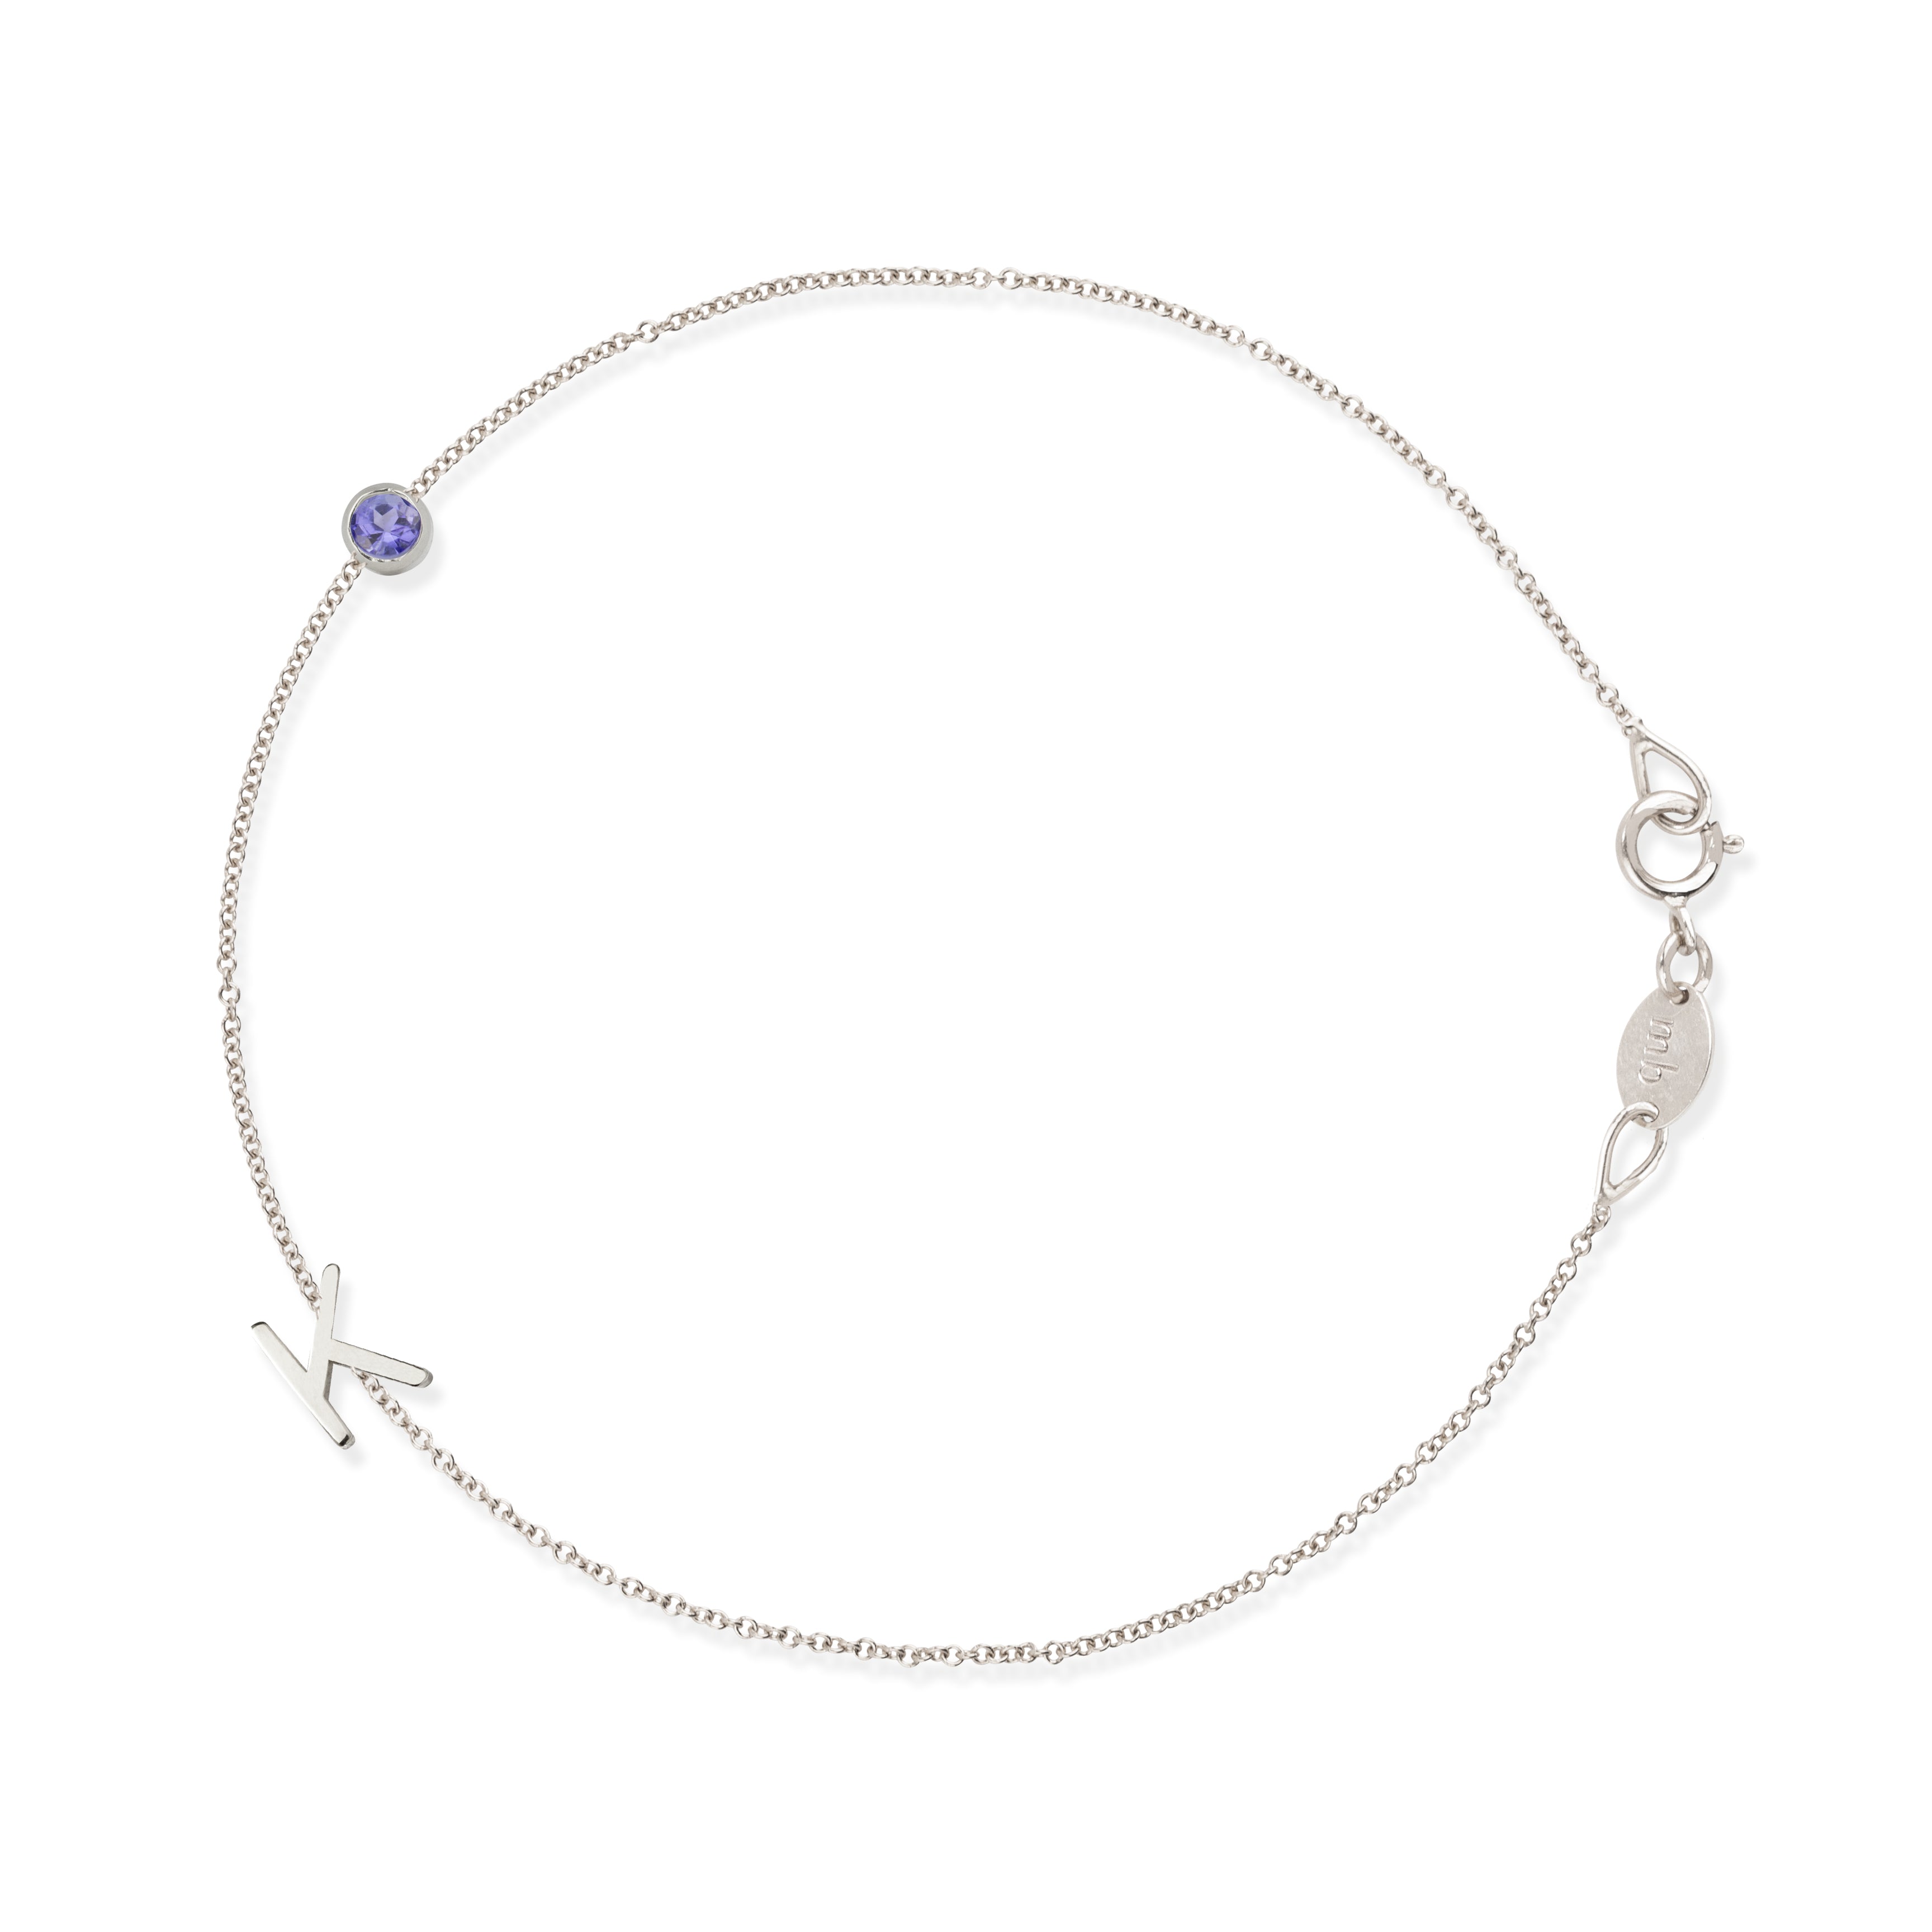 Shop Women's Bracelets in Gold & Diamond | GLAMIRA.co.uk